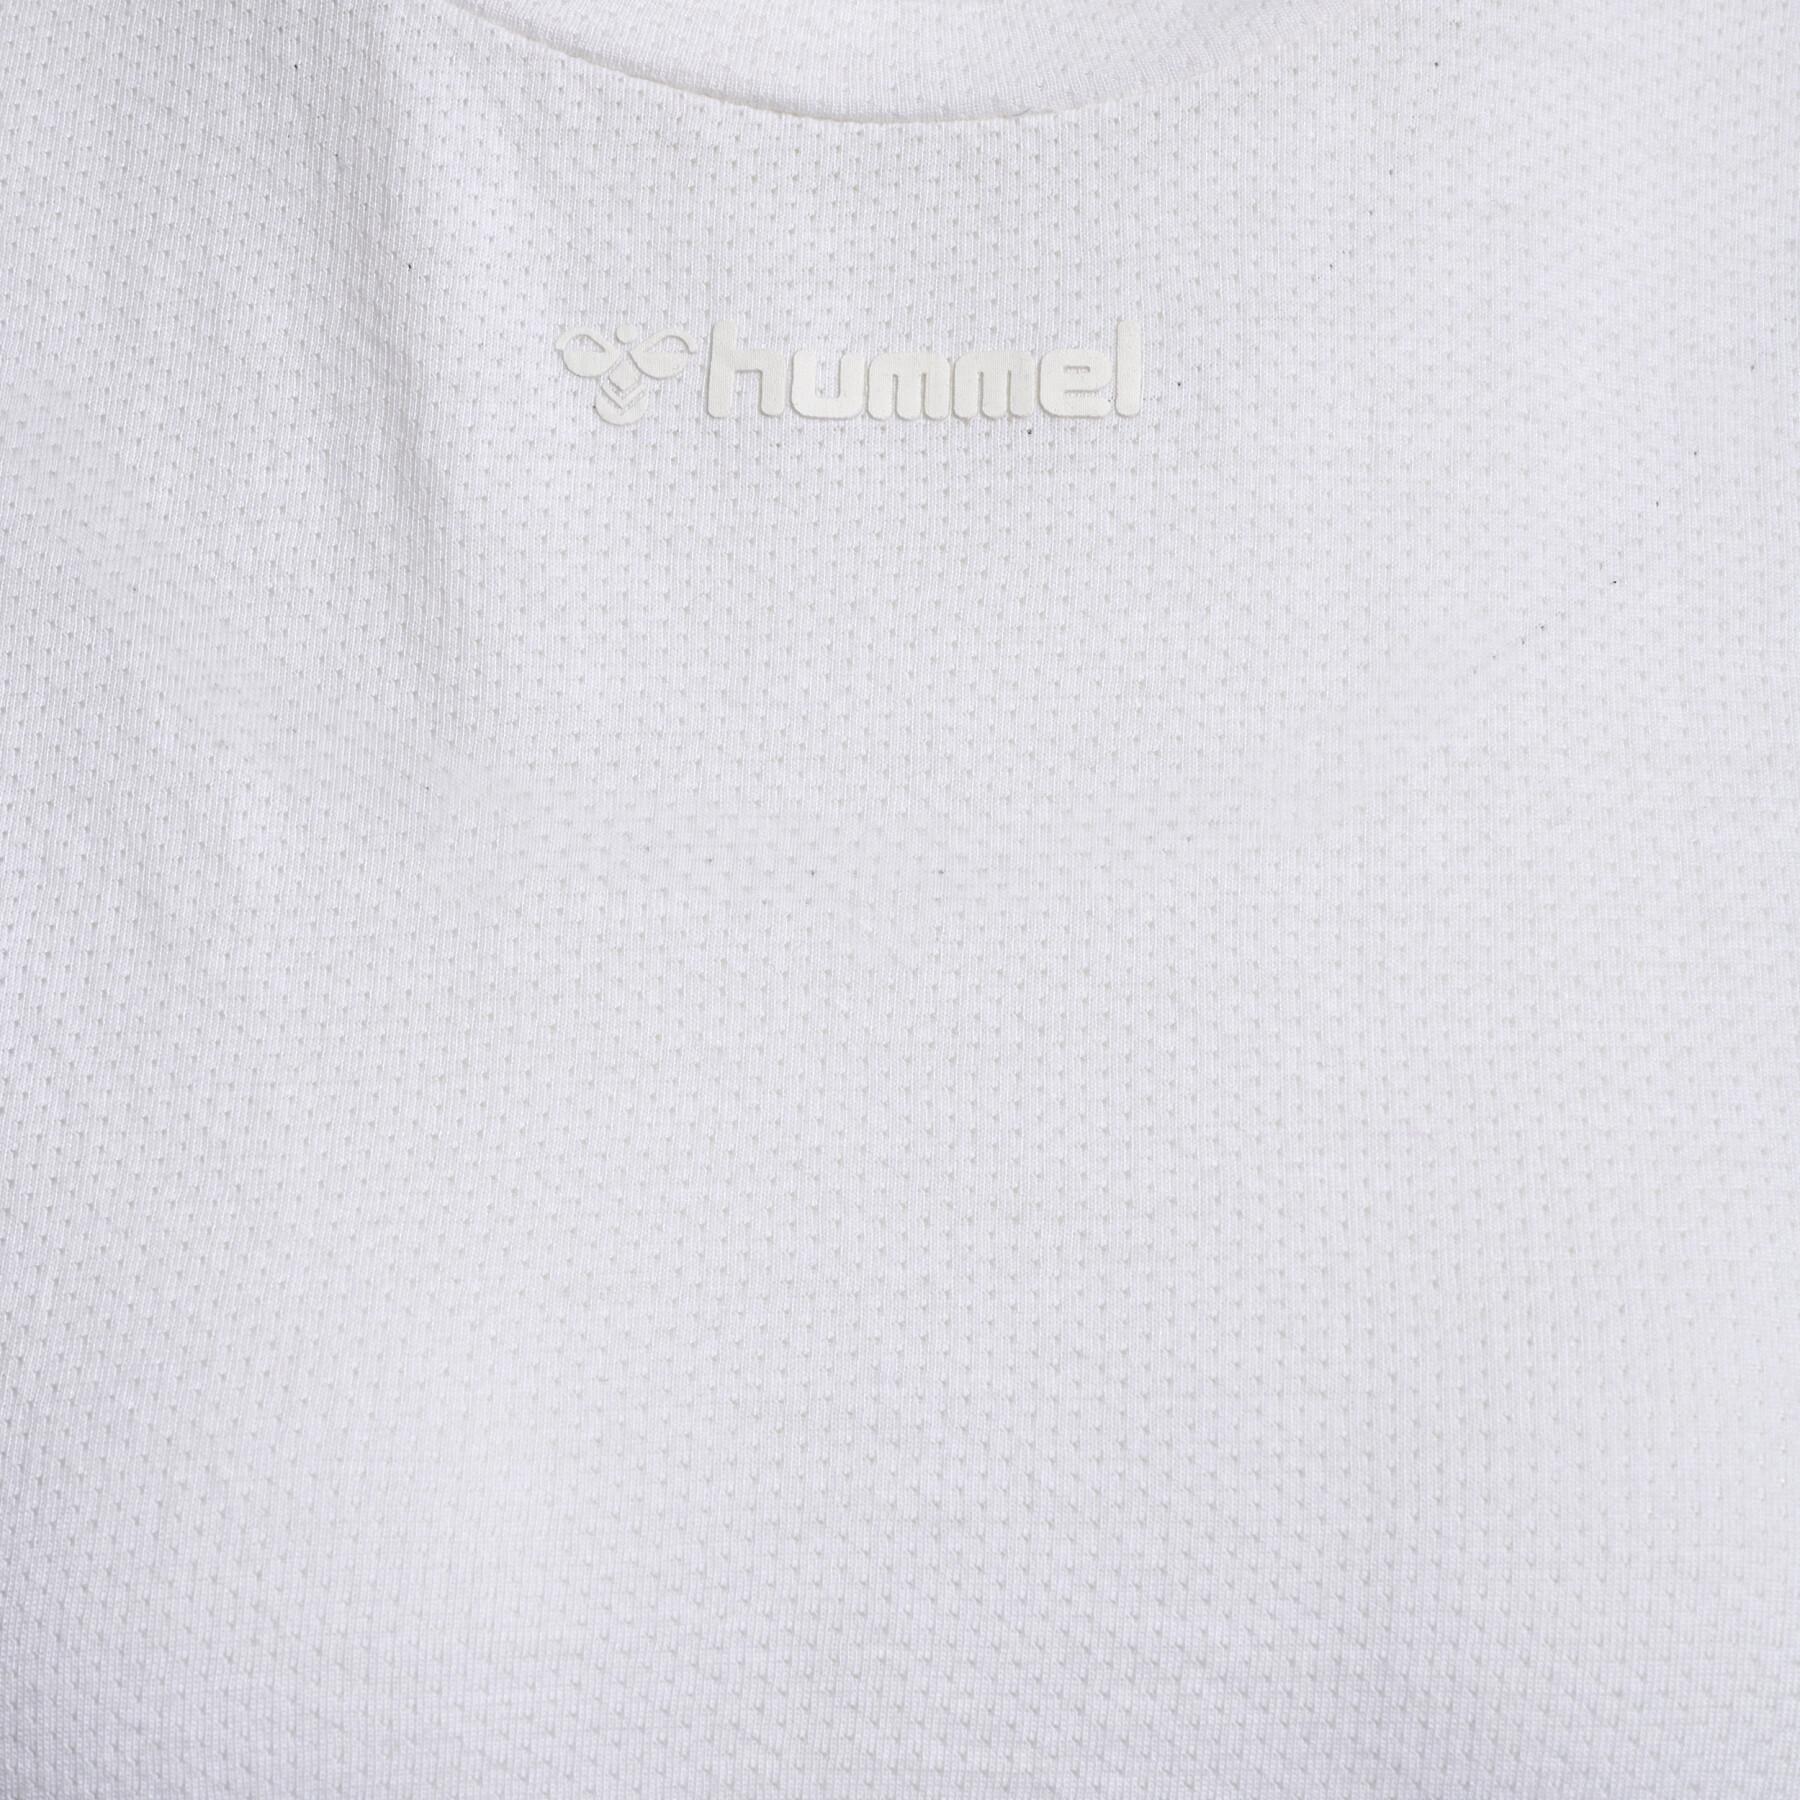 T-shirt femme Hummel MT Vanja